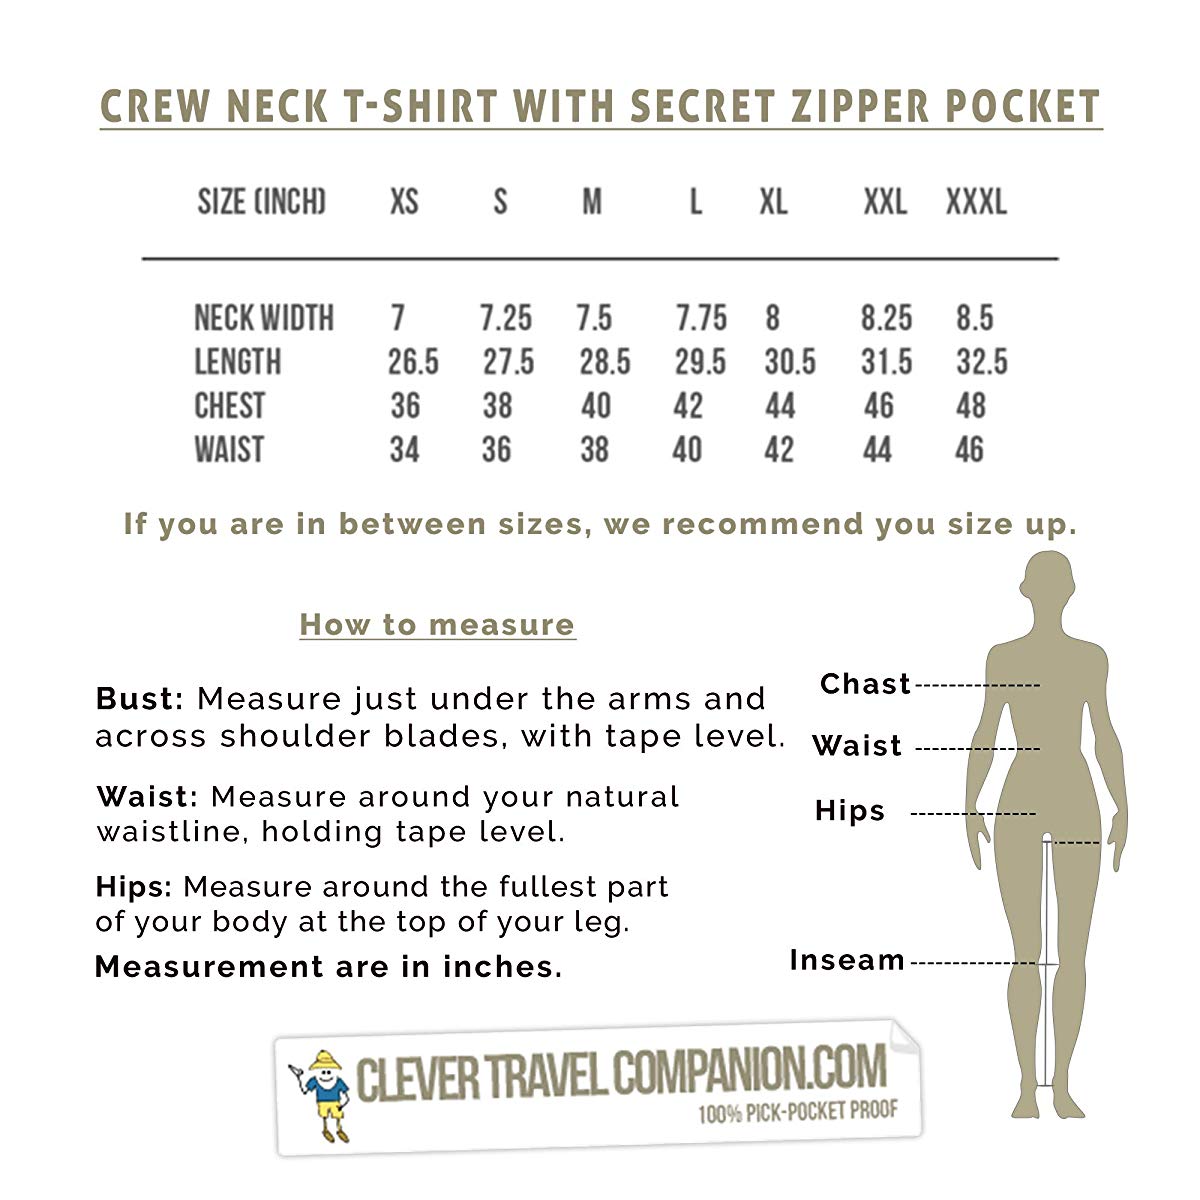 Crew Neck T-shirt with secret zipper pocket